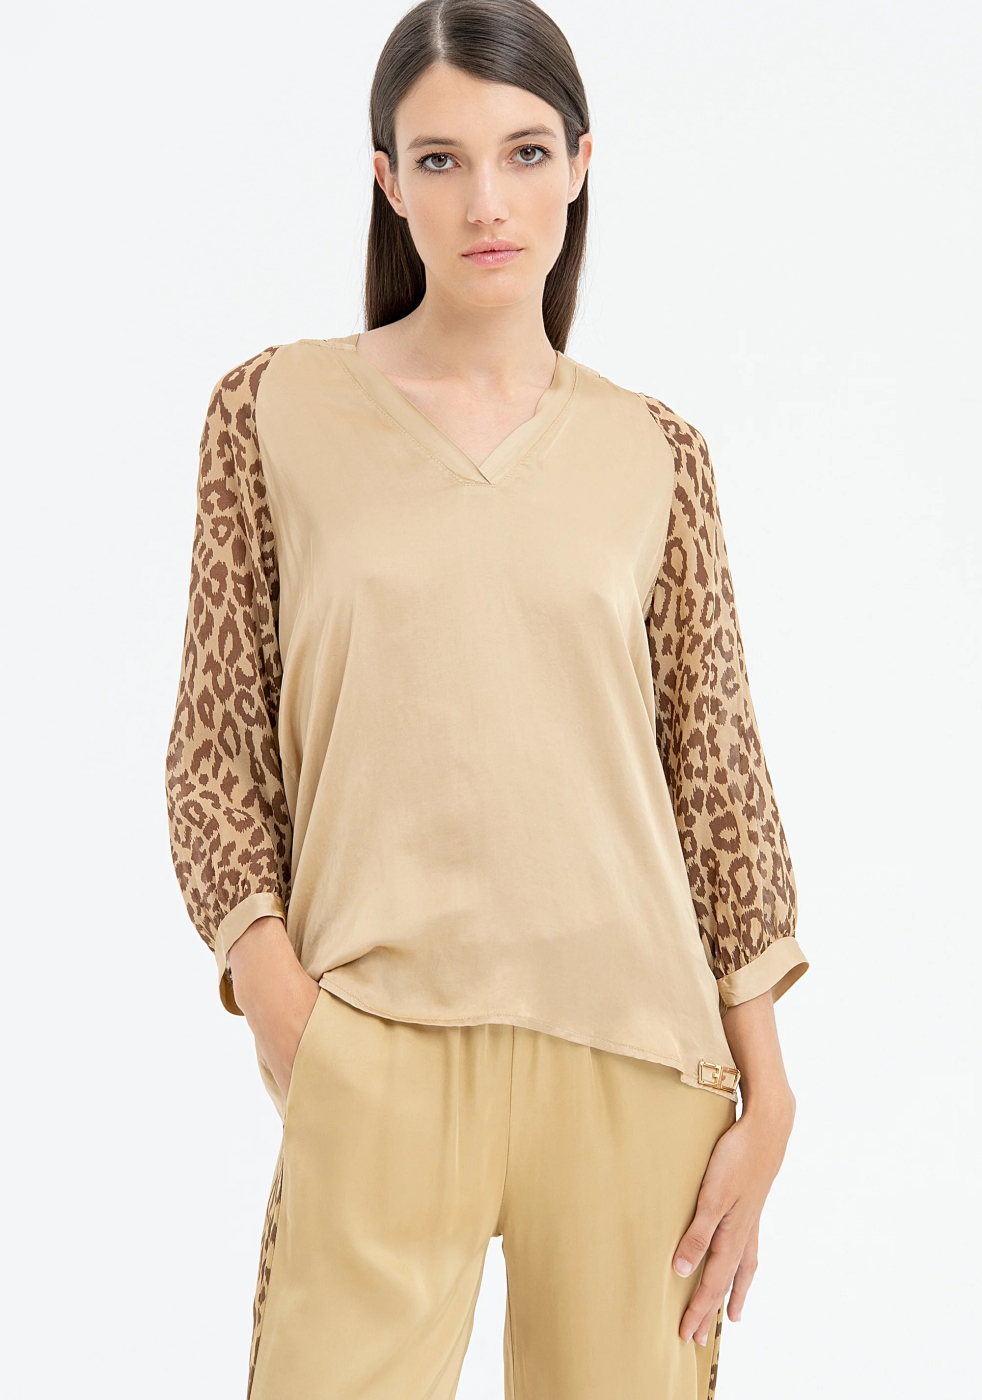 FRACOMINA camiseta combinada camel y animal print